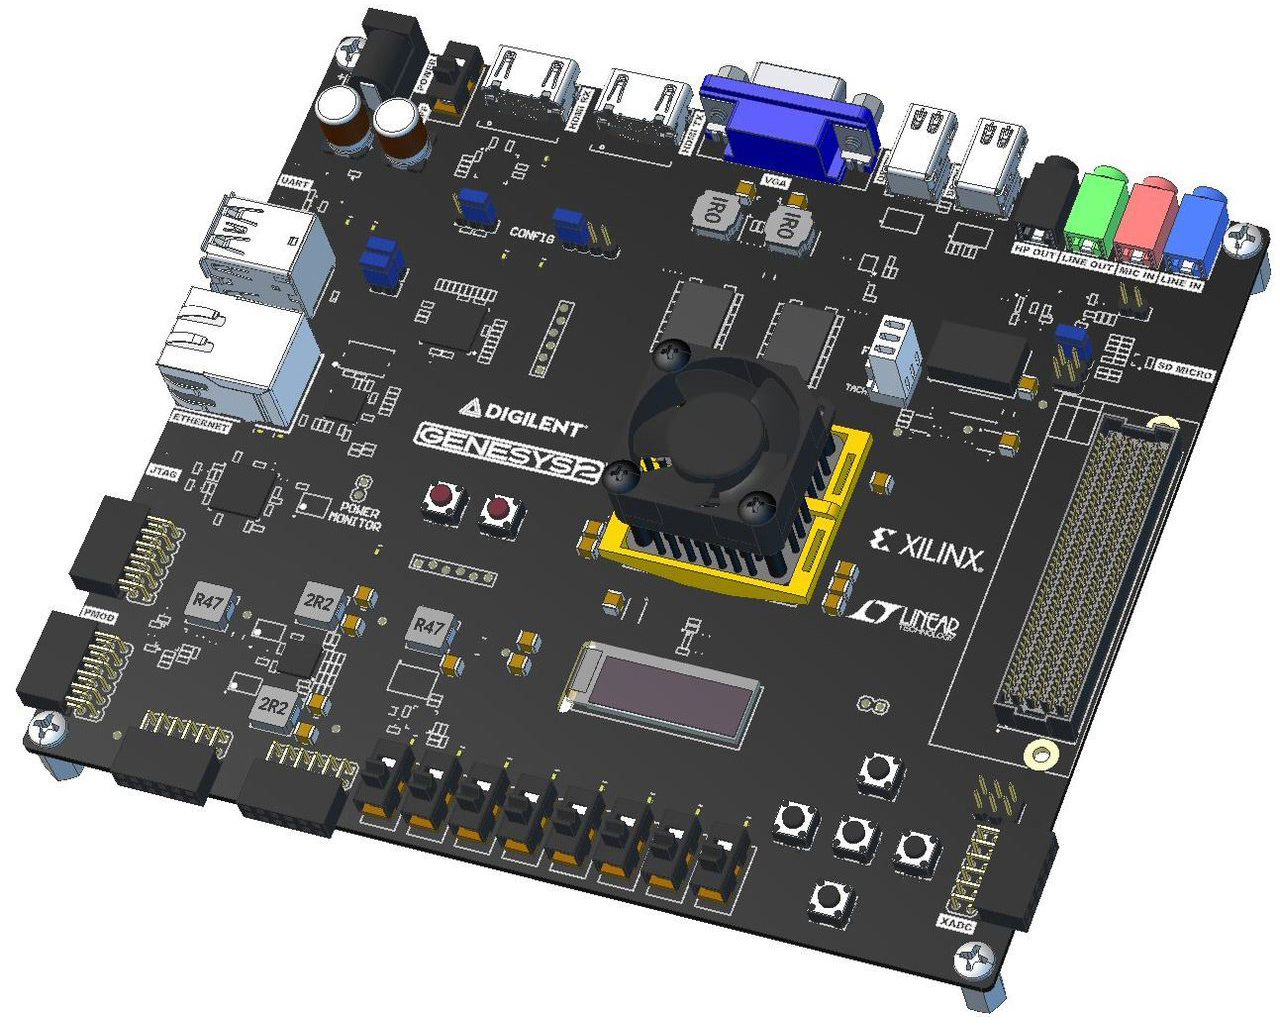 Digilent Xilinx Genesys 2 Kintex-7 FPGA Development Board - Click to Enlarge